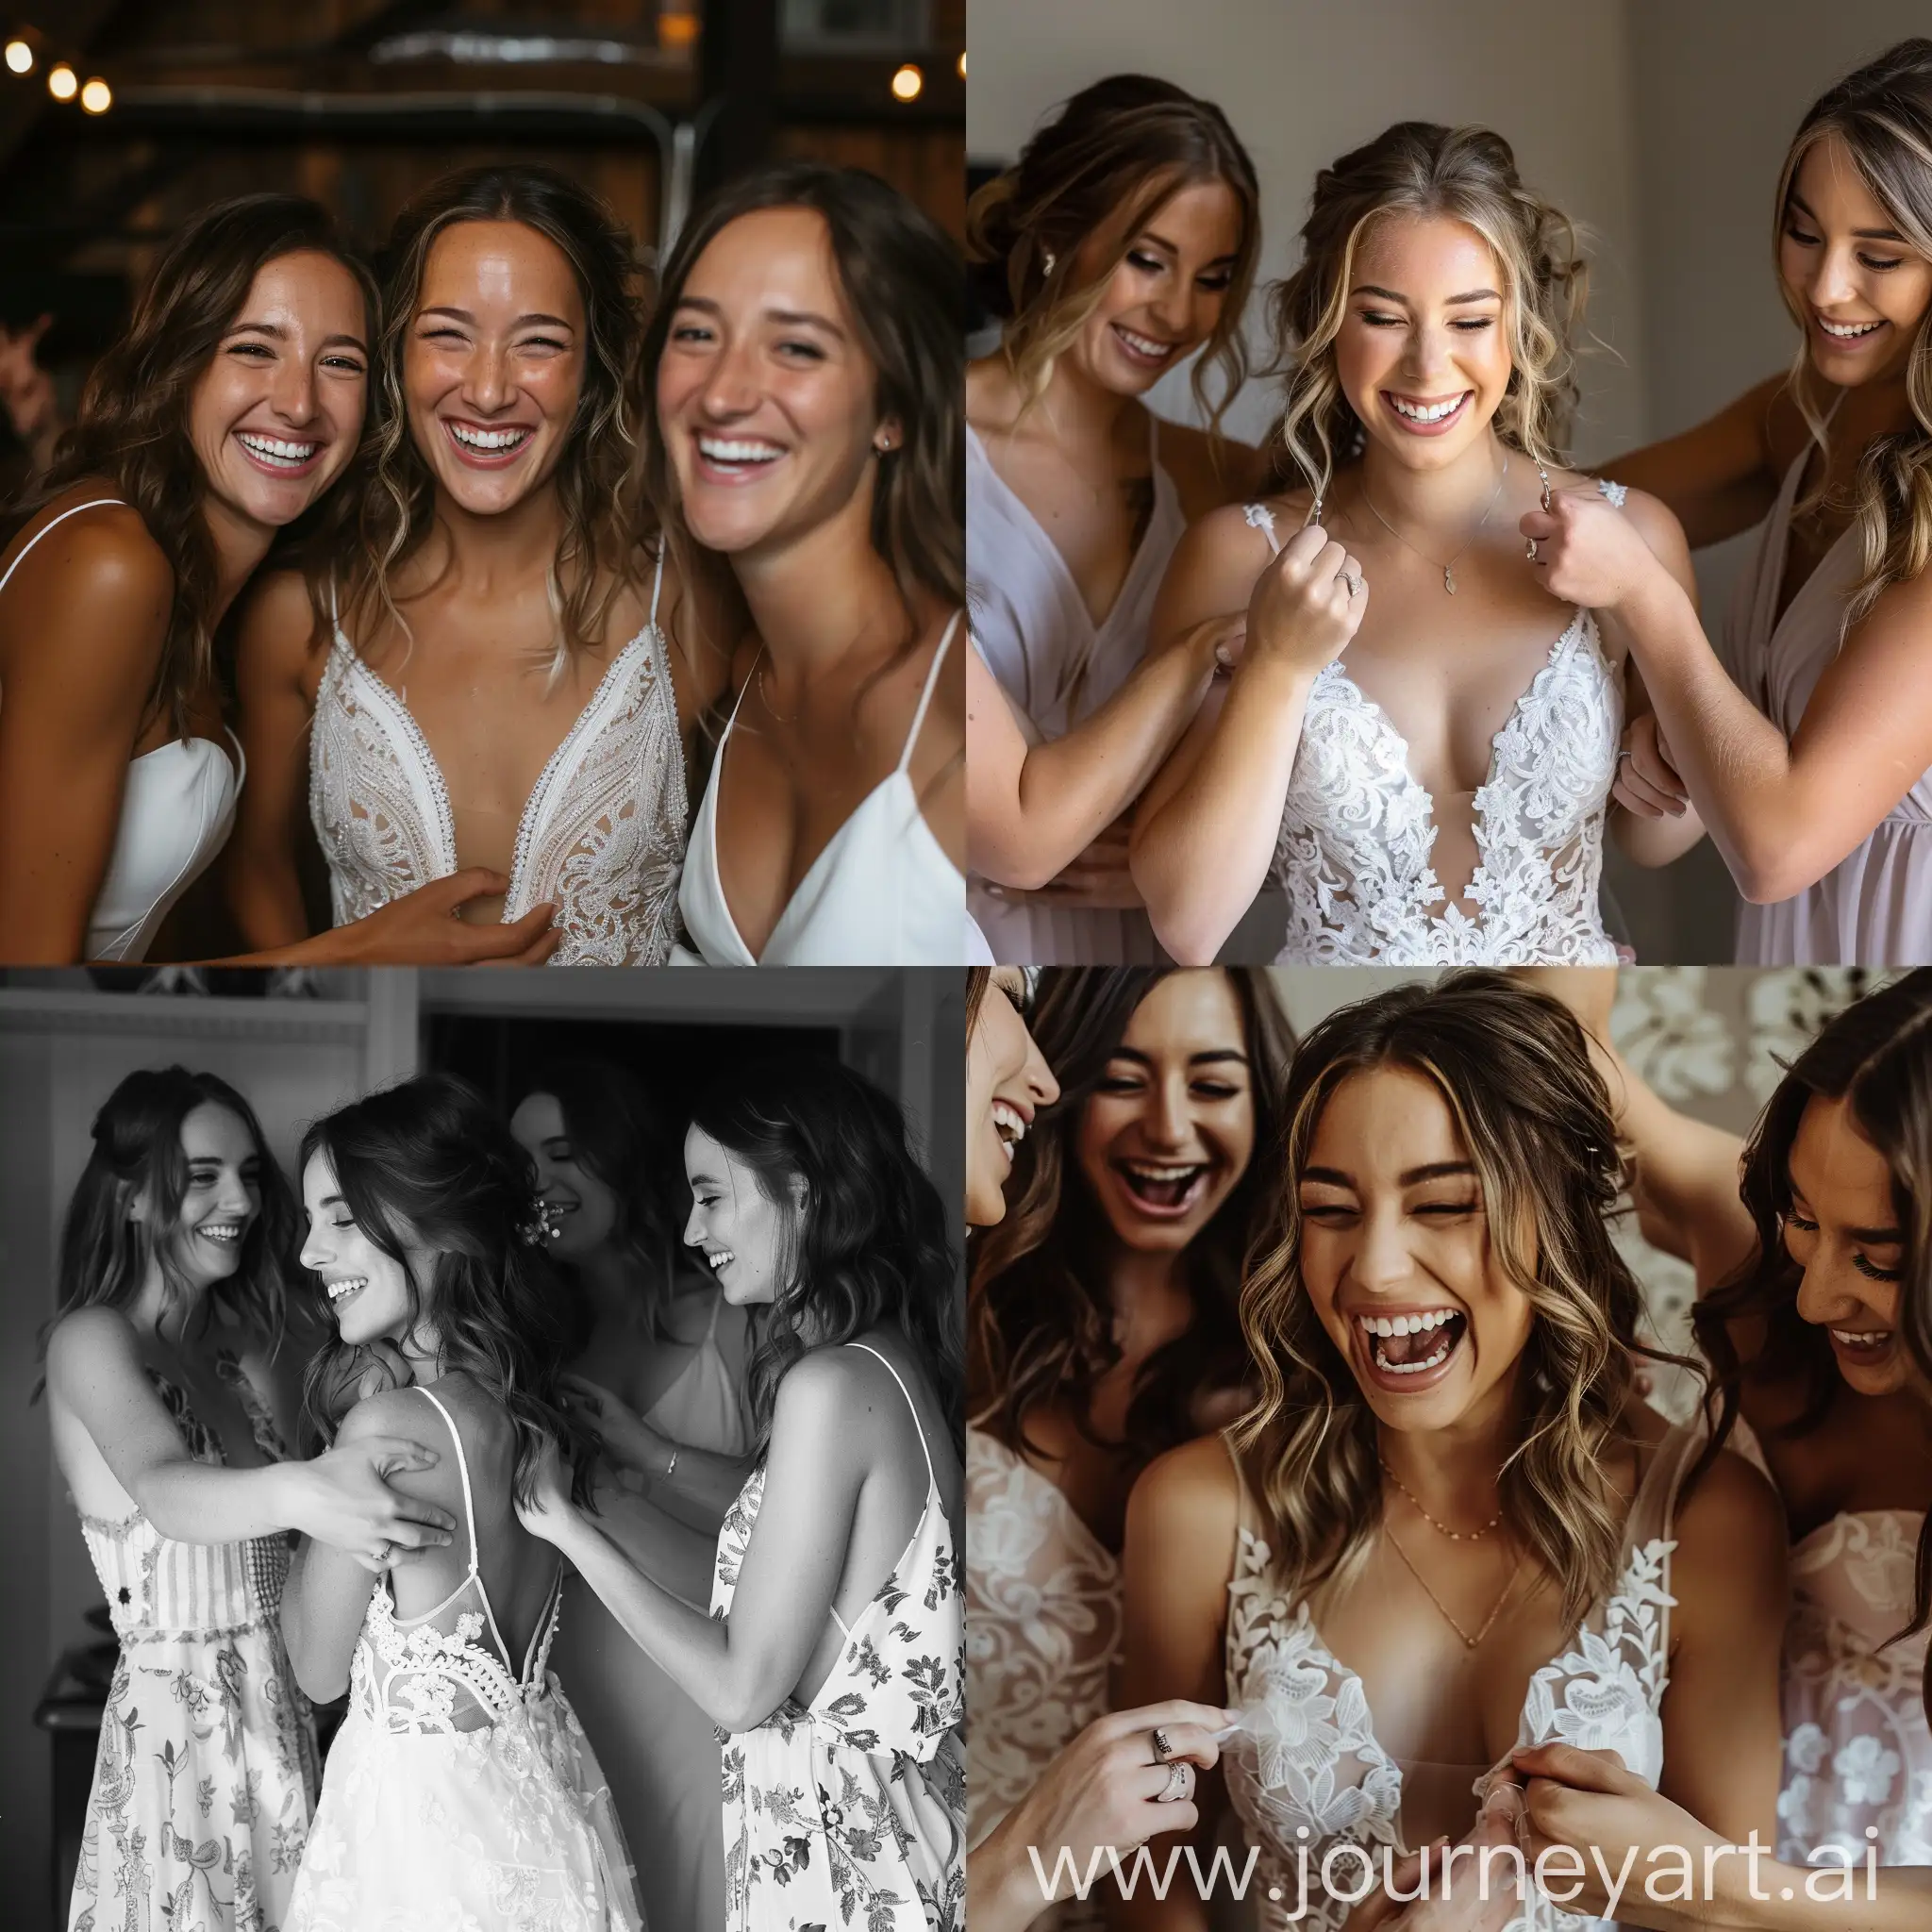 Friends-Dress-the-Bride-Joyful-Celebration-of-Friendship-and-Matrimony